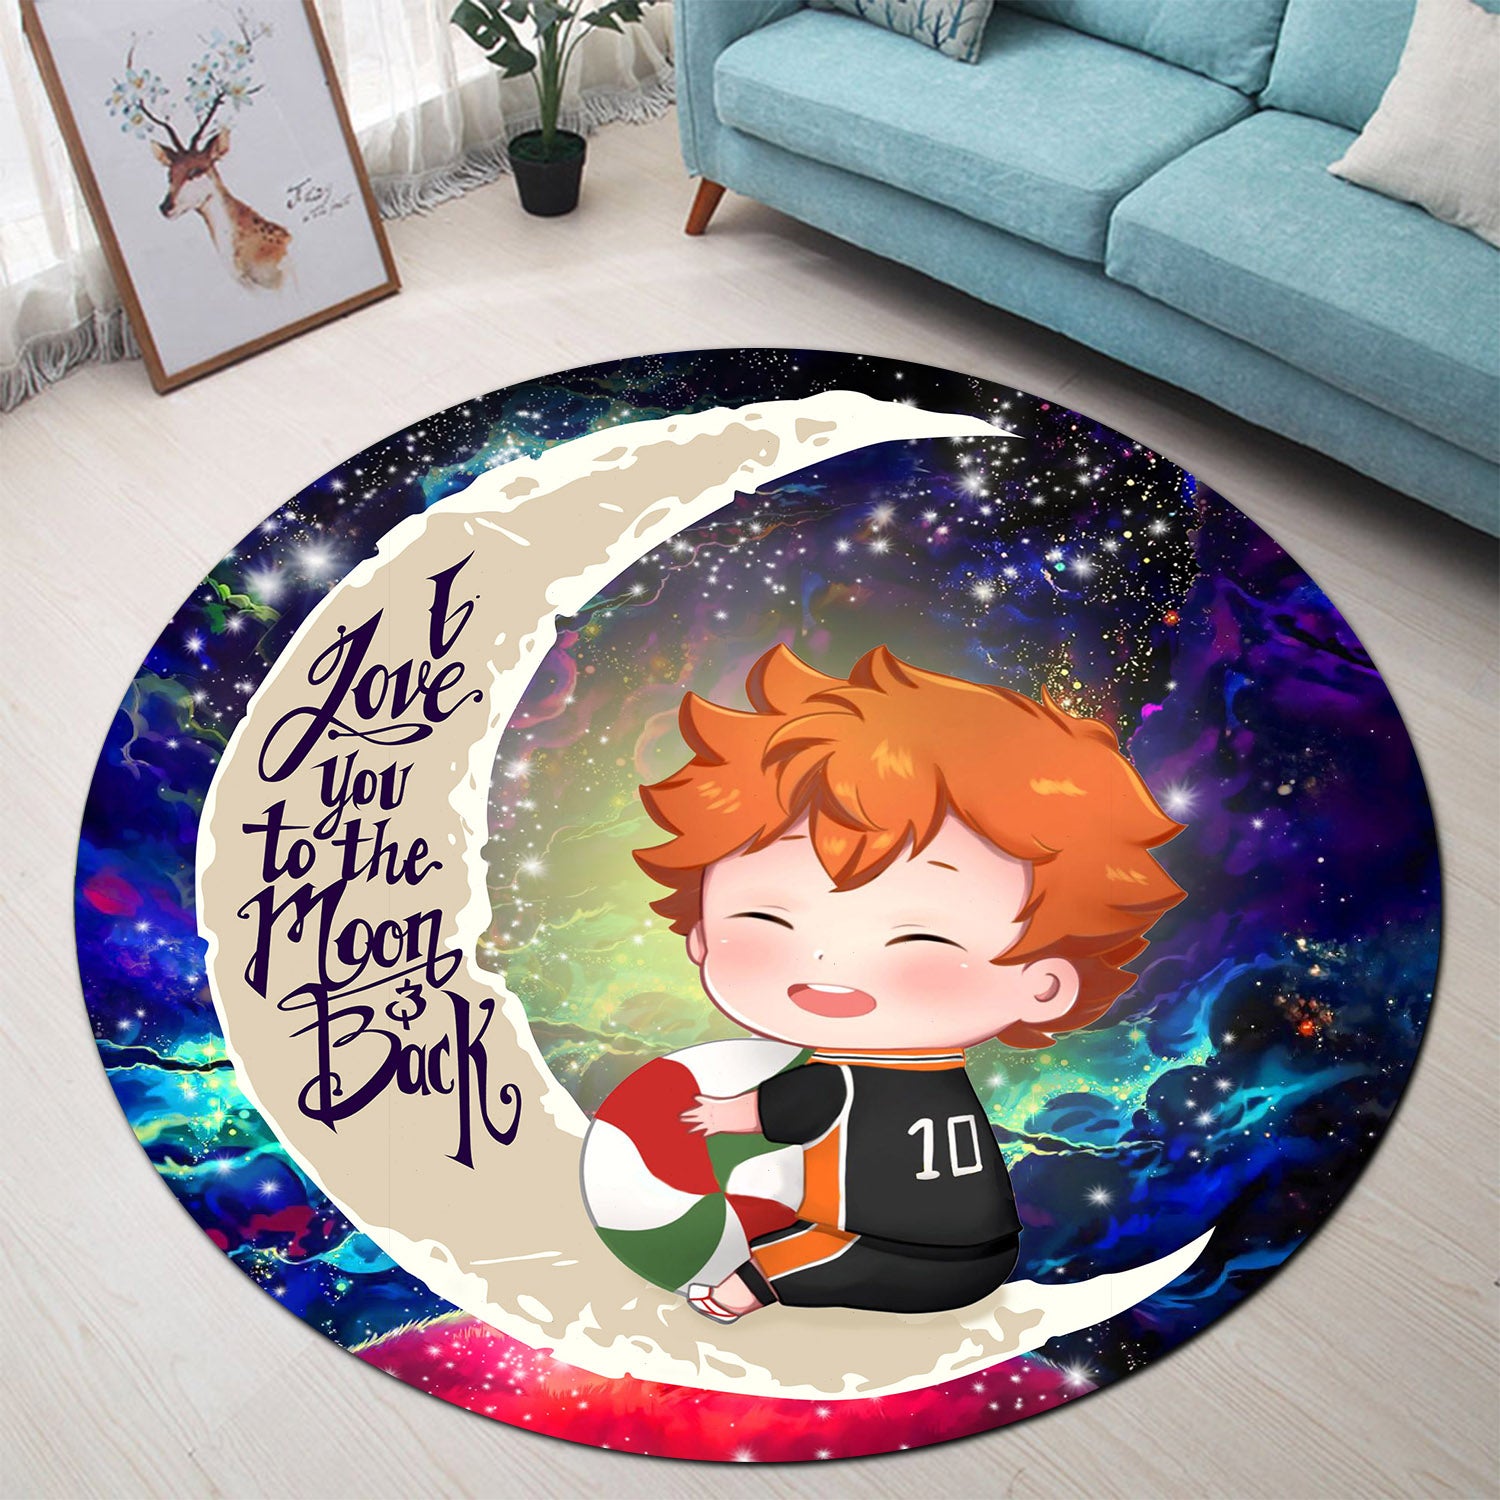 Cute Hinata Haikyuu Love You To The Moon Galaxy Round Carpet Rug Bedroom Livingroom Home Decor Nearkii